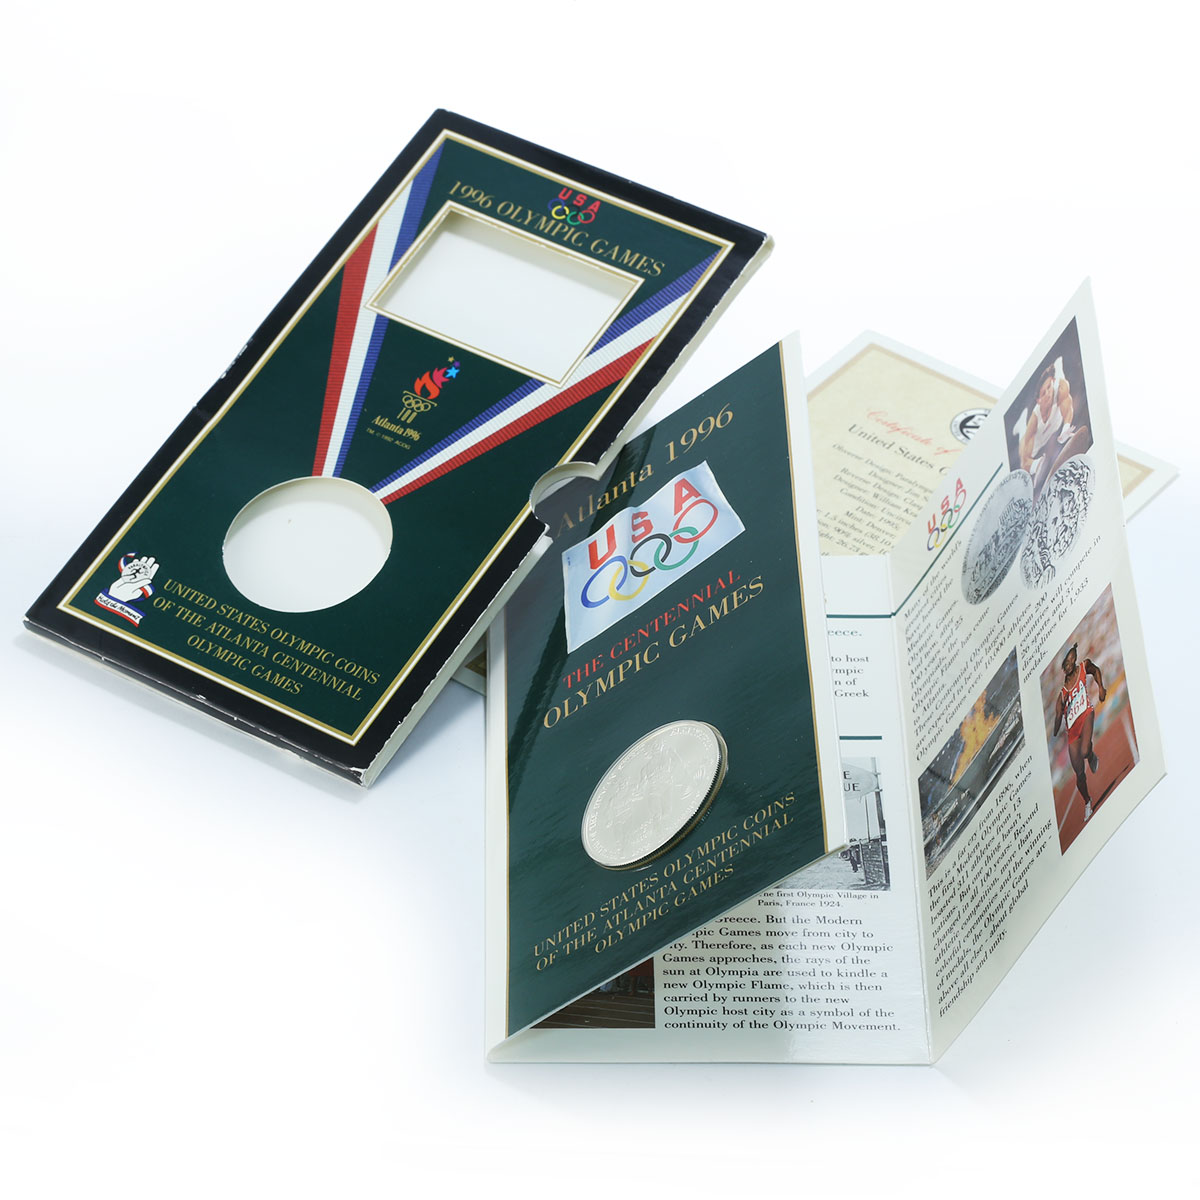 USA Blister Silver Coin 1 Dollar Olympic Games Paralympics Sprint Atlanta 1995